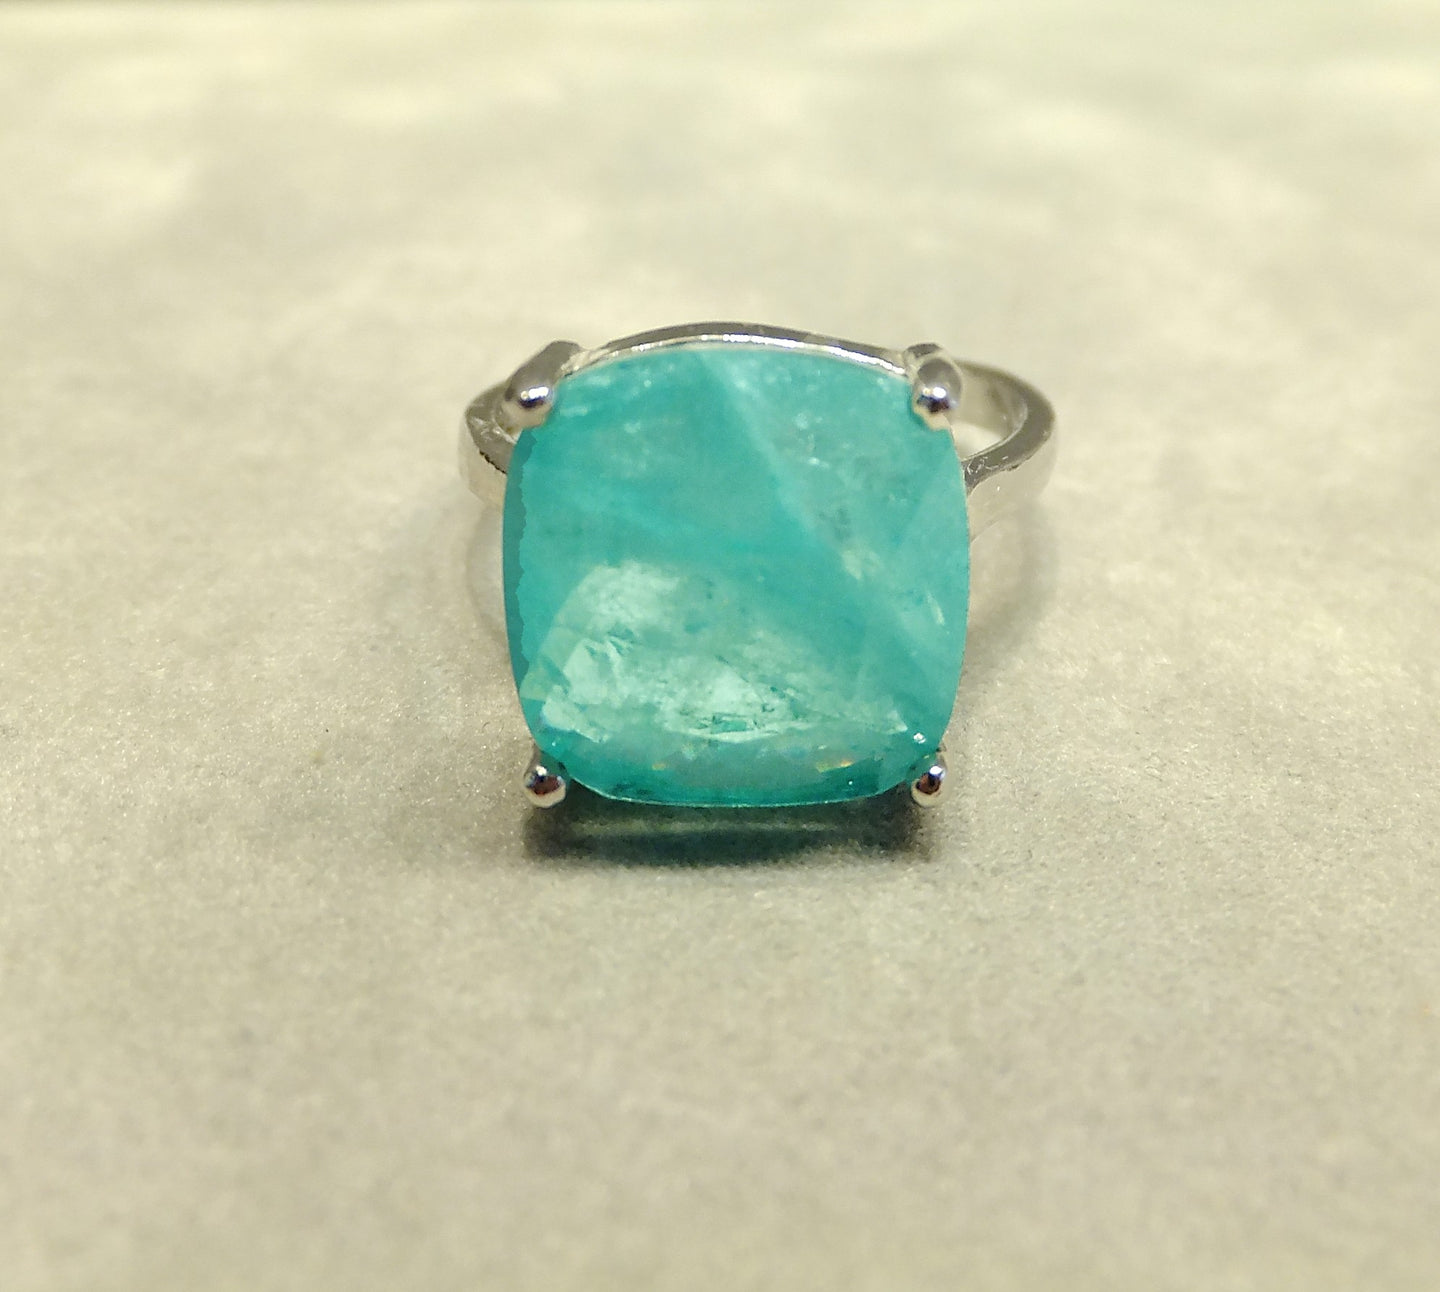 Paraiba blue tourmaline ring